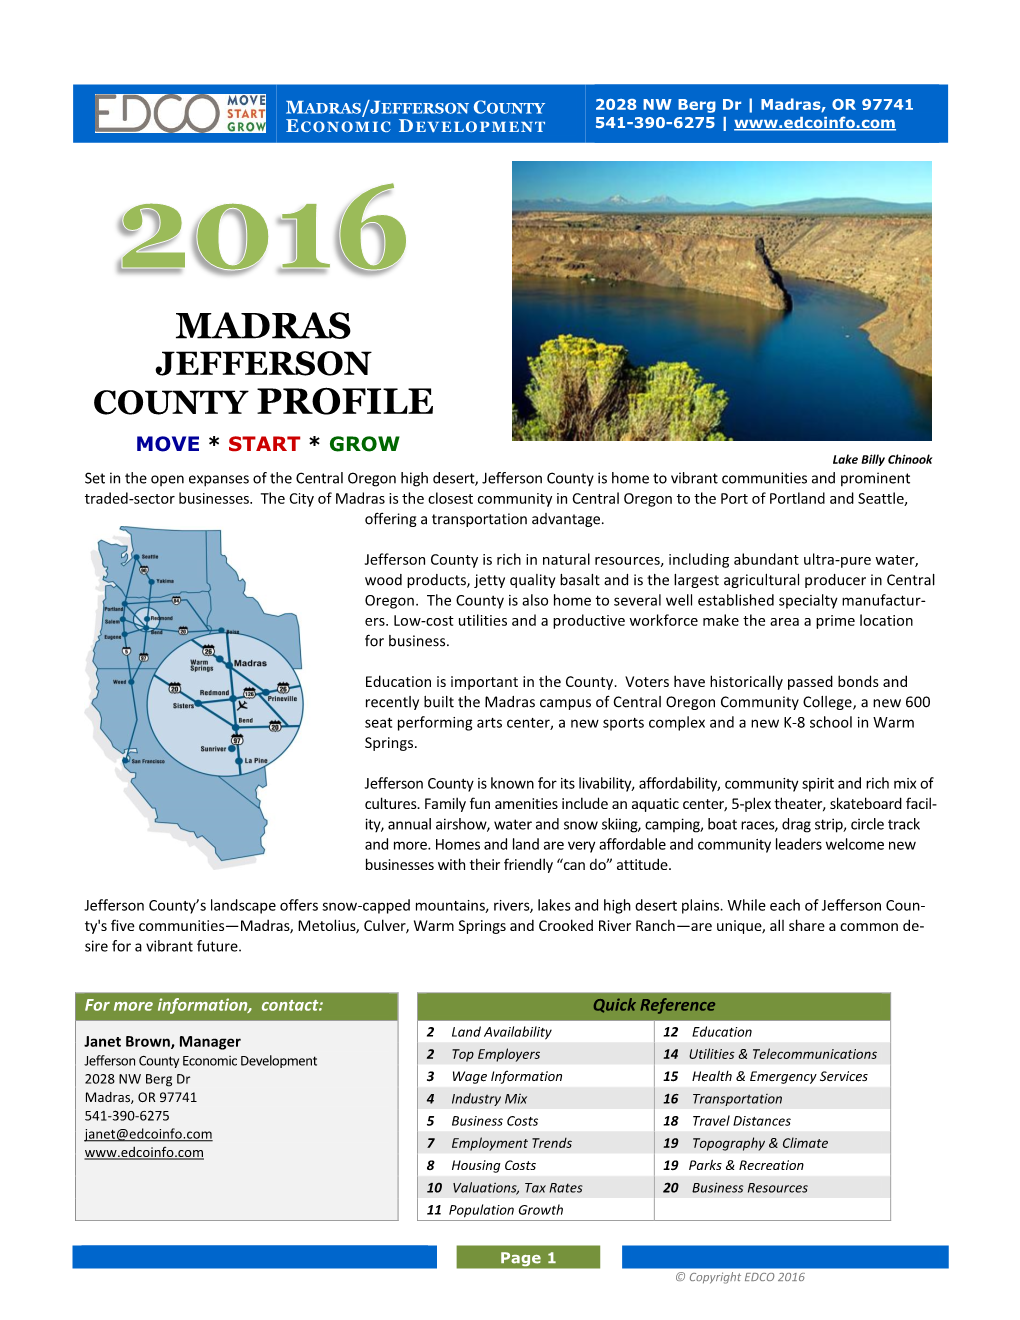 Madras County Profile